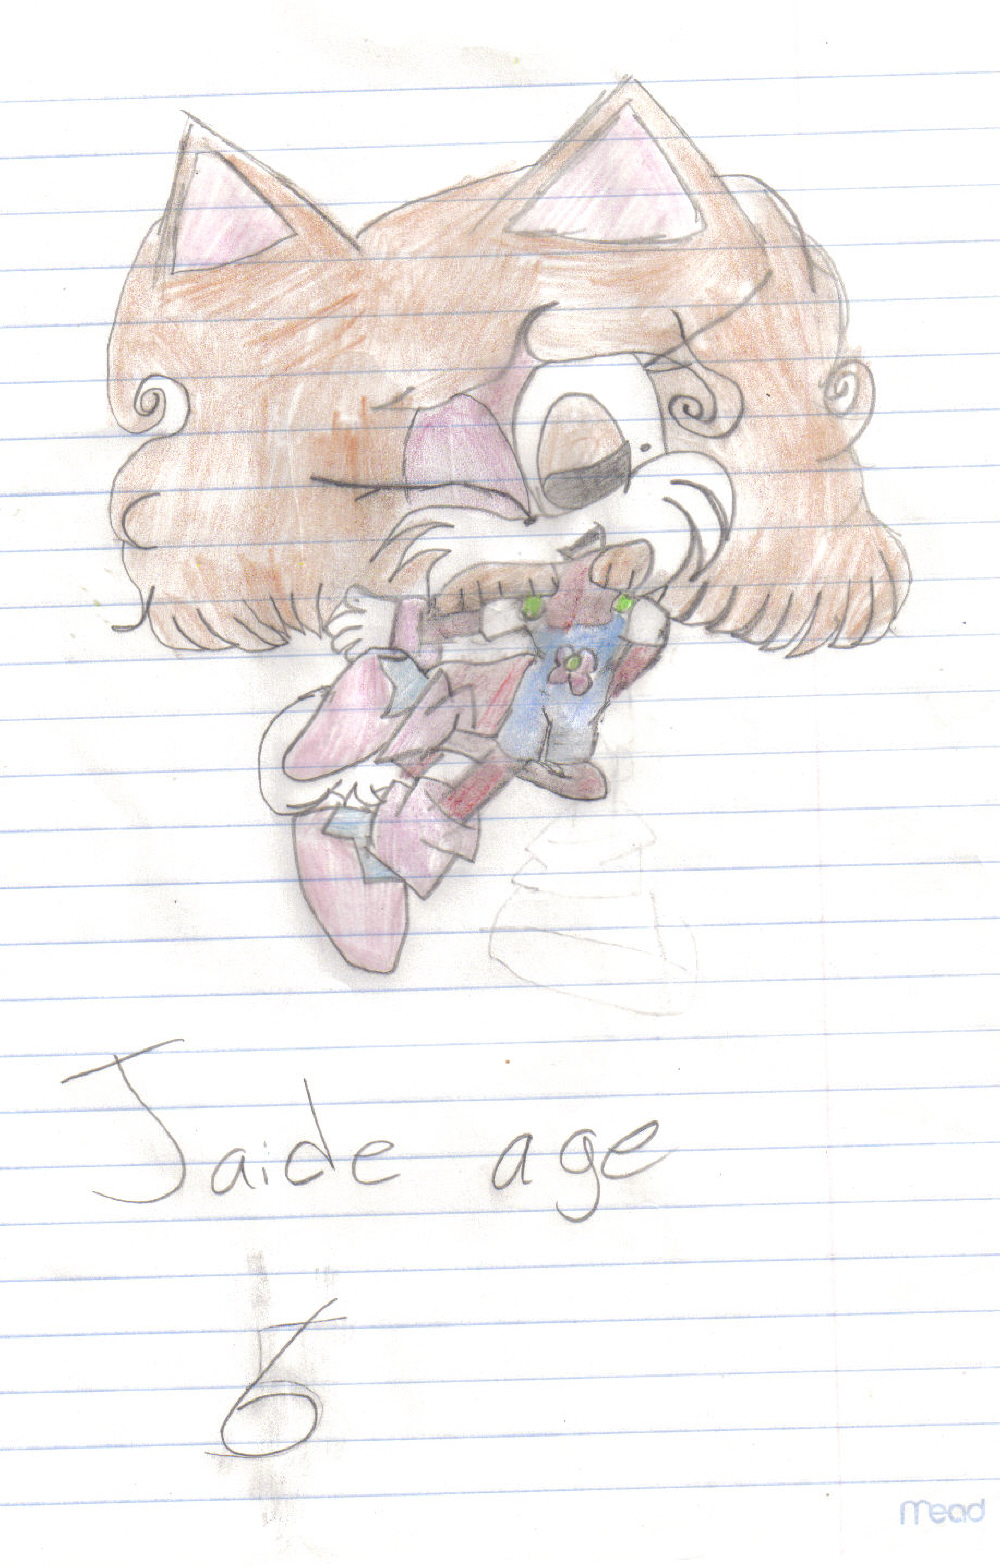 Jaide age 6 by jaideanna